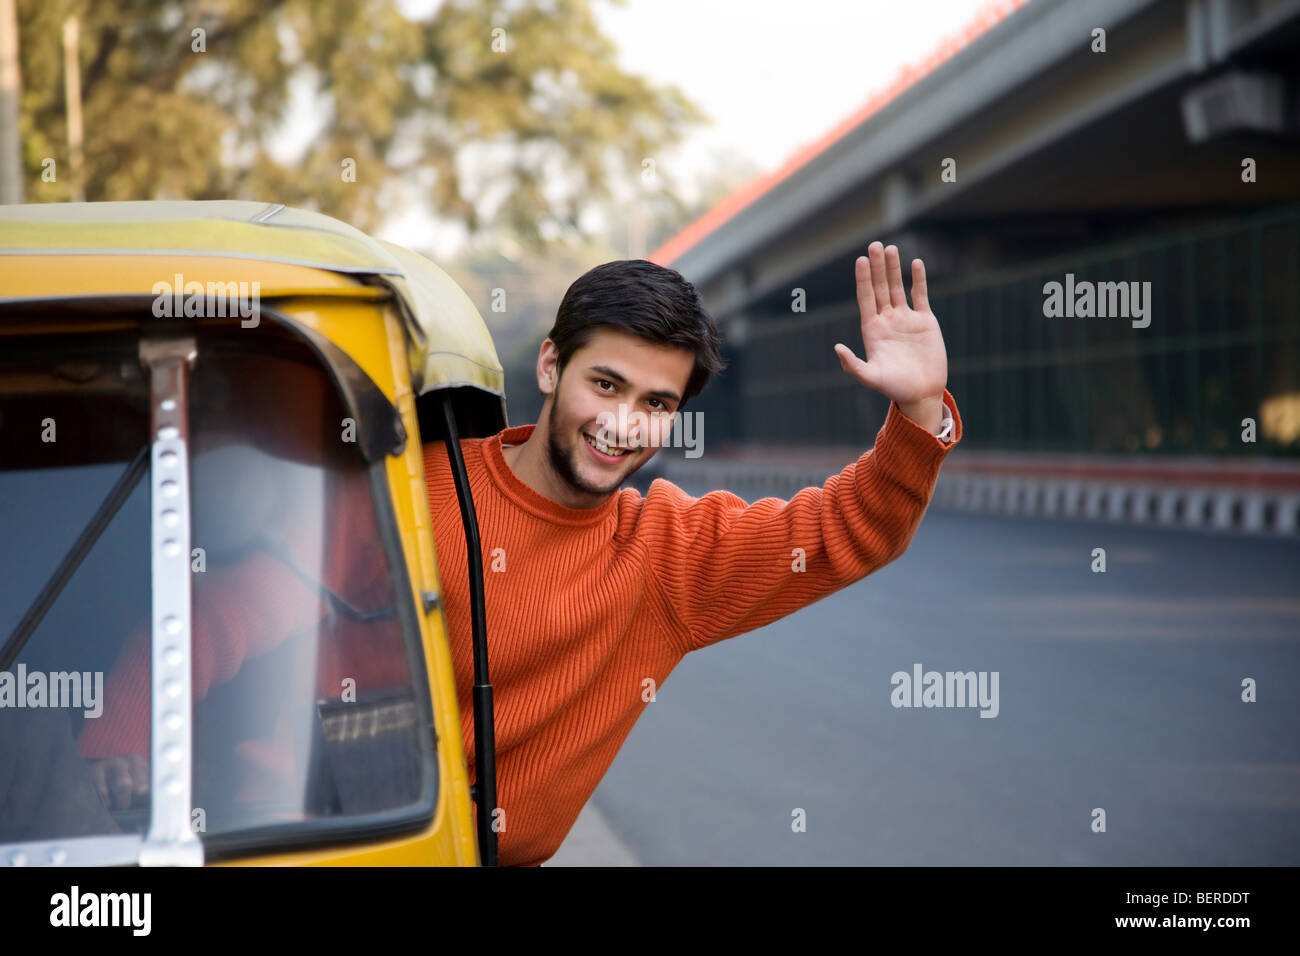 Man waving from an auto rickshaw Stock Photo